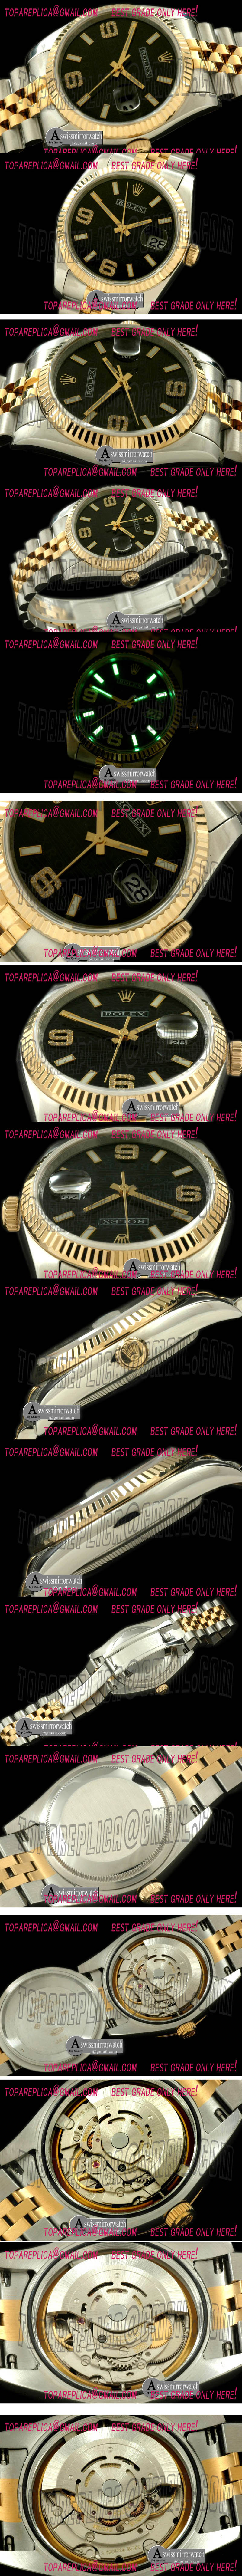 Replica Rolex DateJust Watches